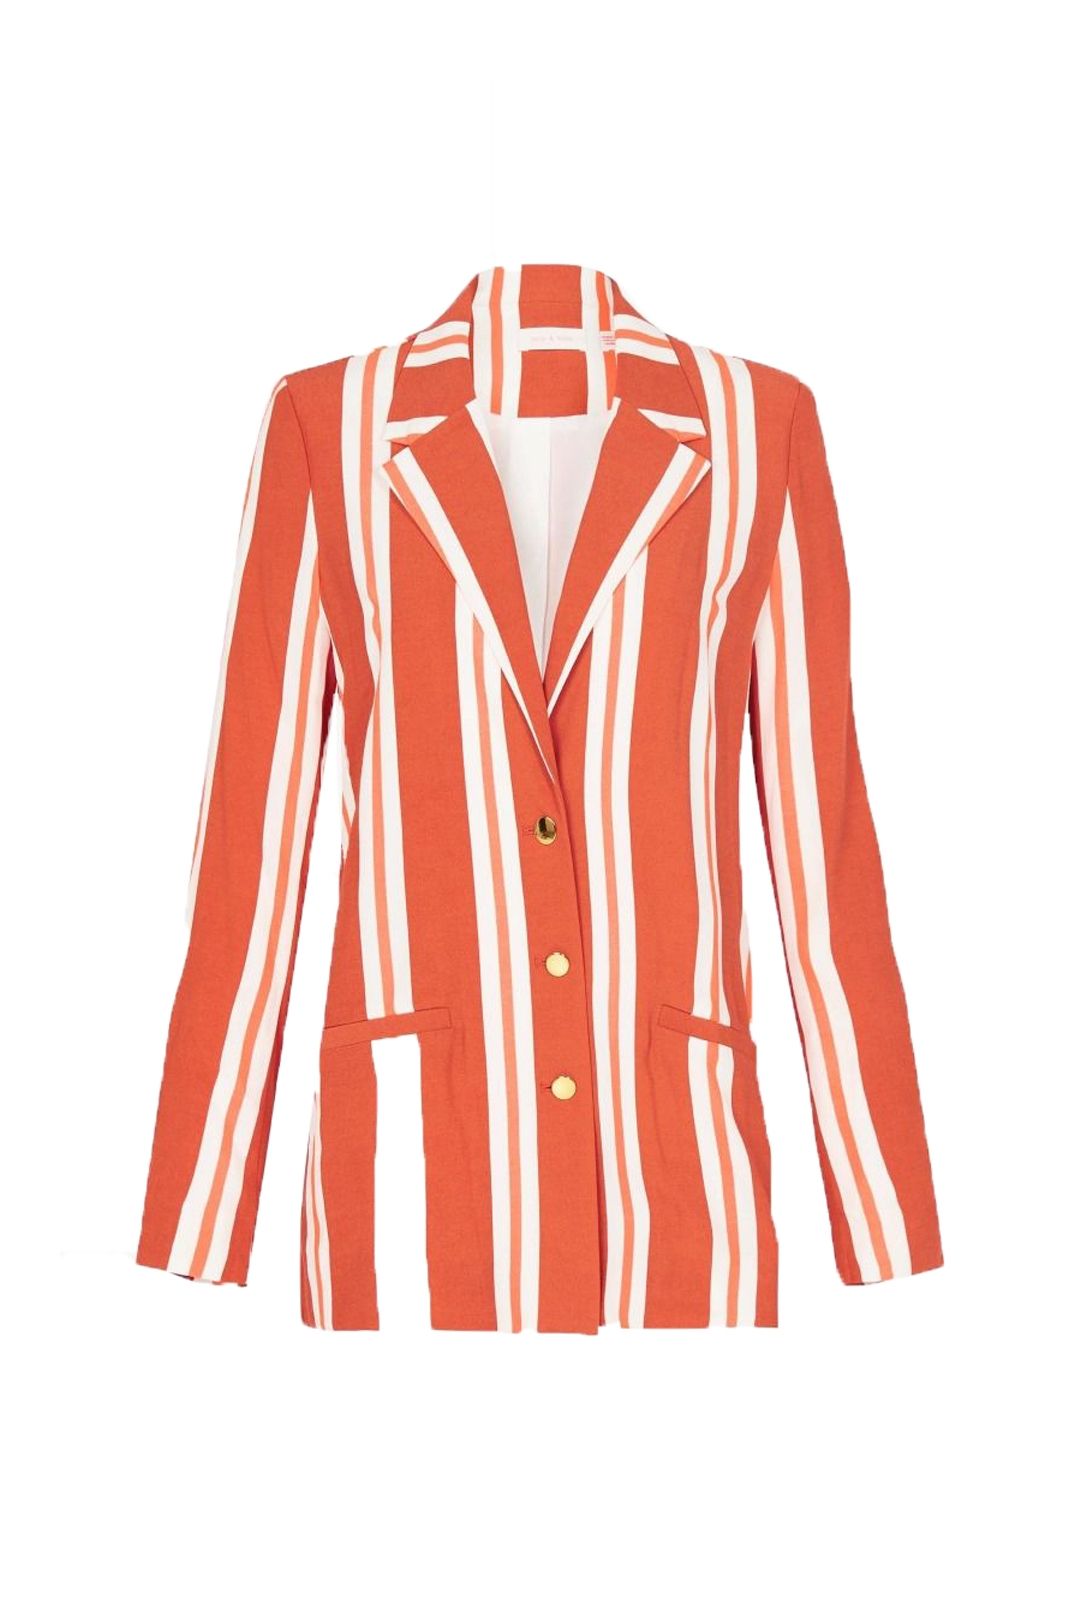 Sass and Bide - The Strata Jacket - Orange Stripe - Ghost Front